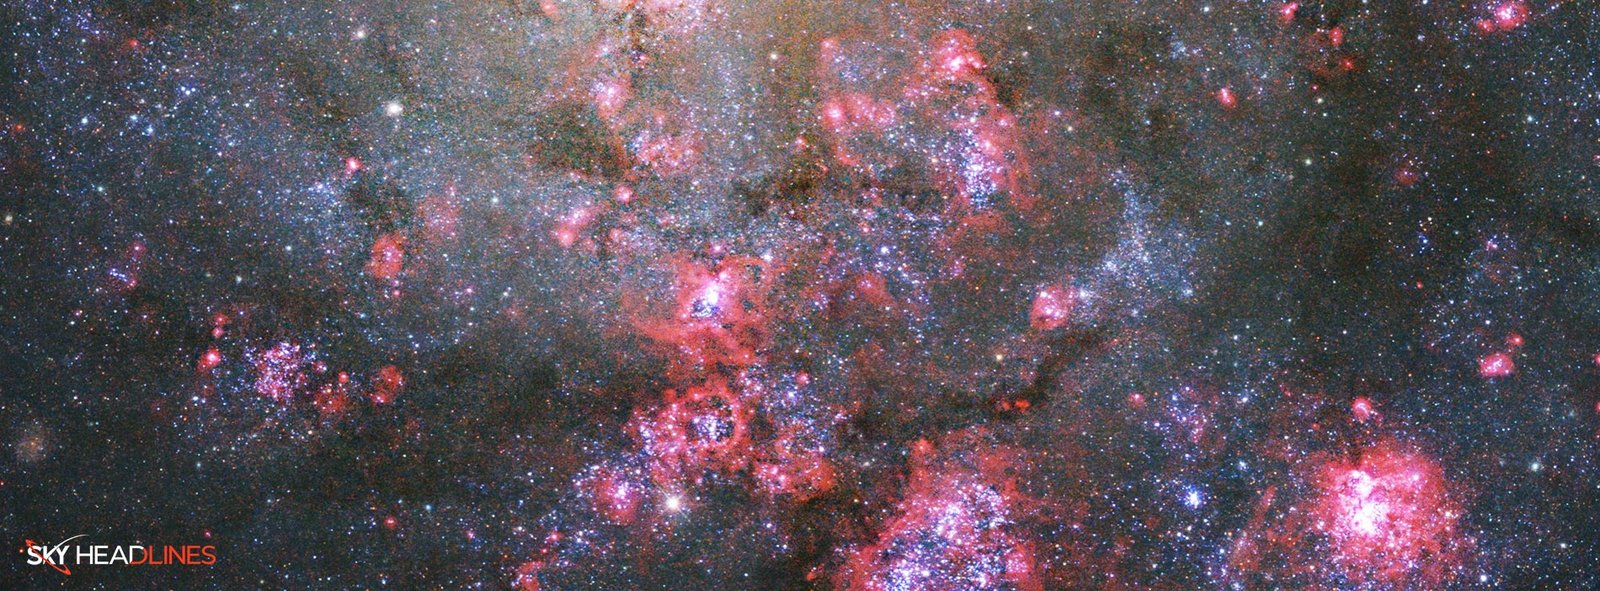 NGC 5068 img 1